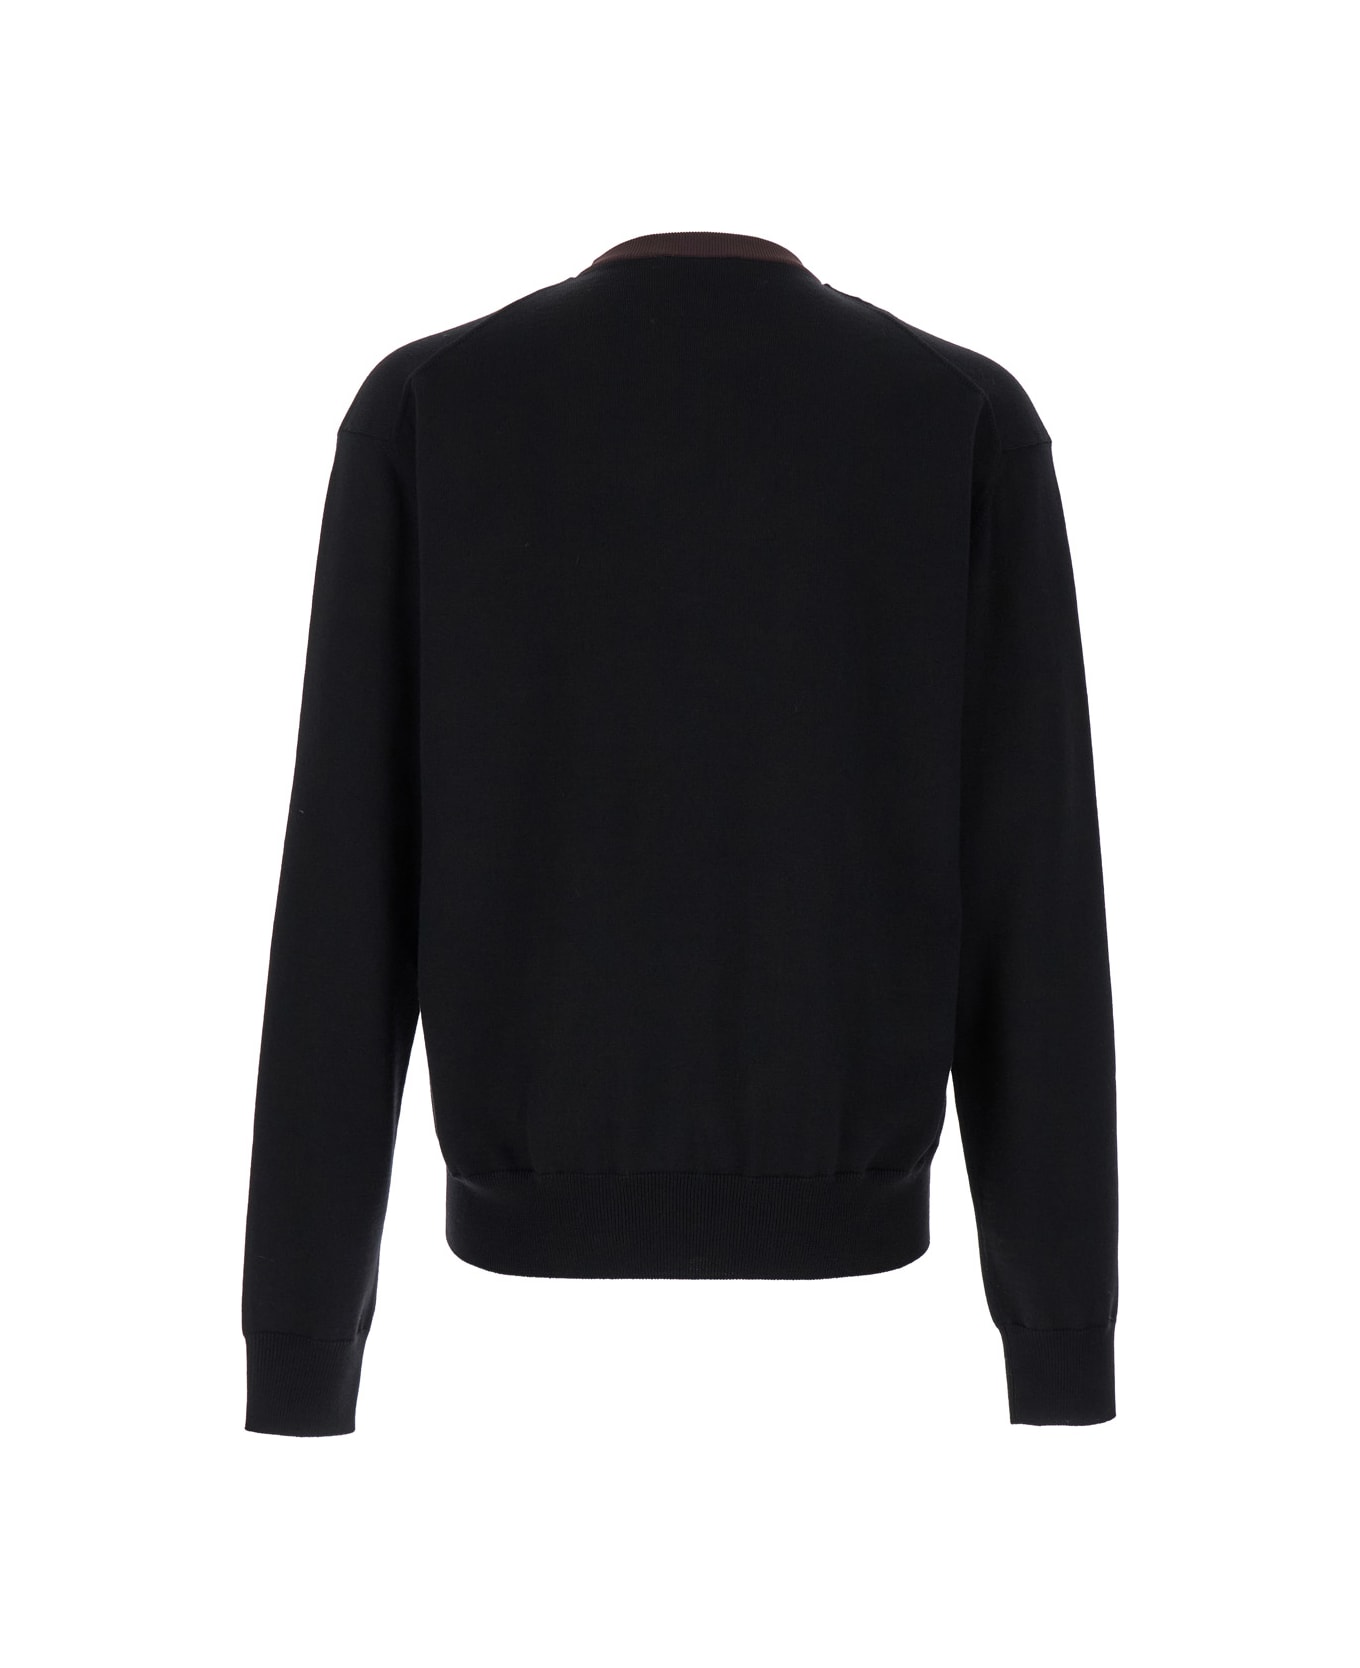 Jil Sander Black And Brown Double-neck Sweater In Wool Man - Black